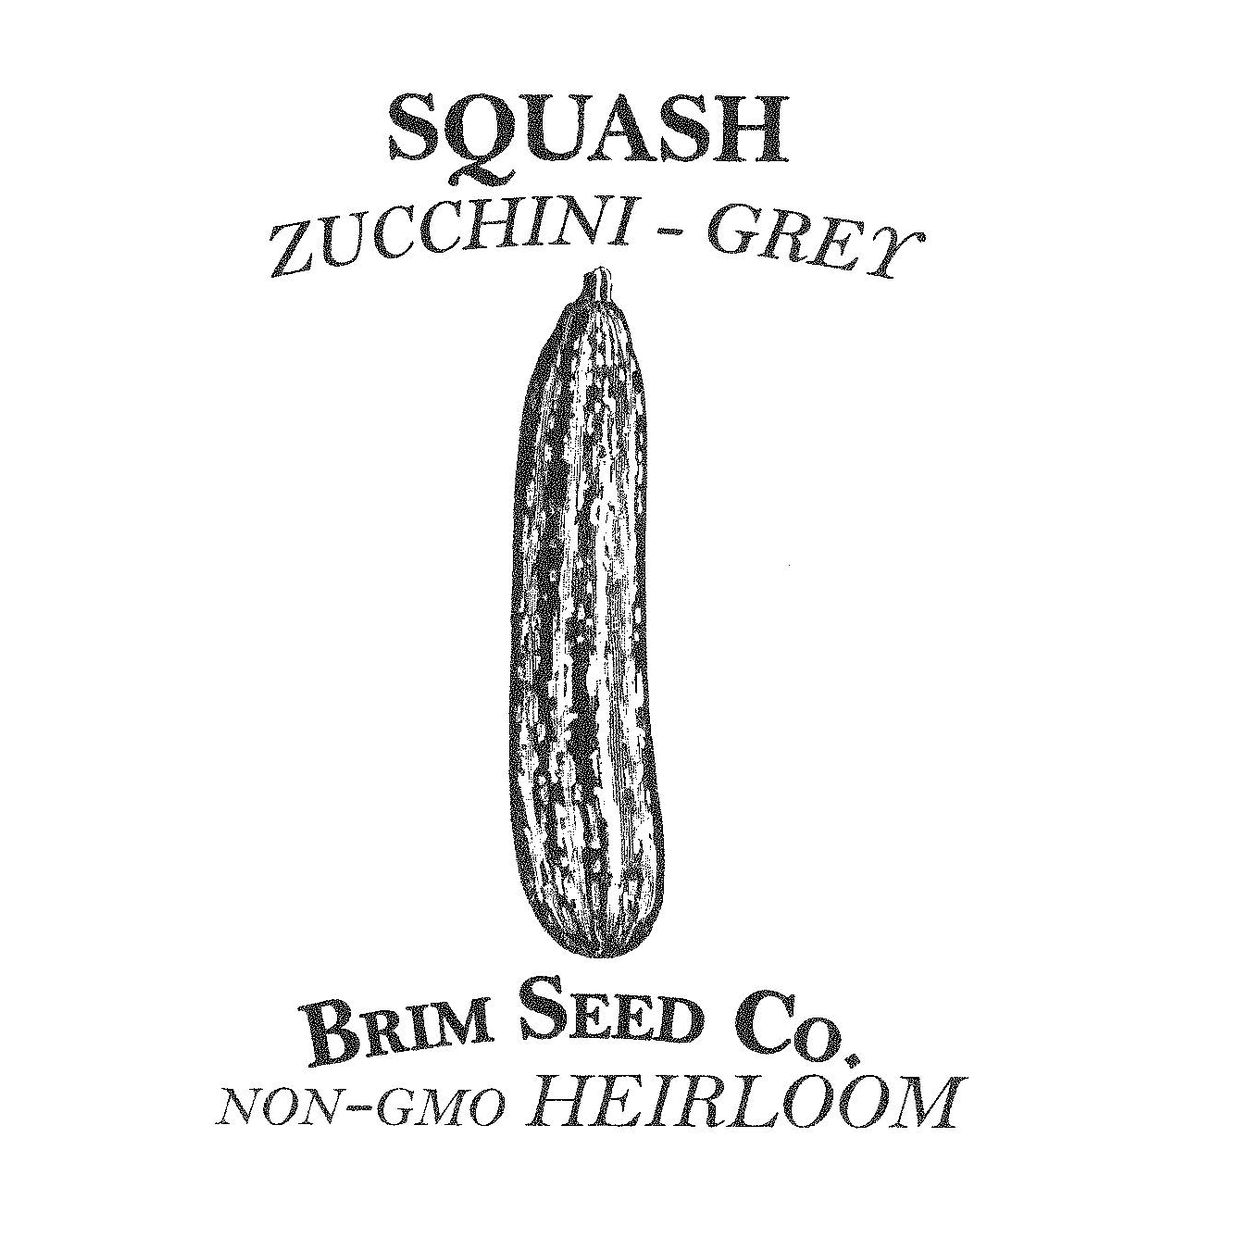 Brim Seed Co. - Grey Zucchini Squash Heirloom Seed